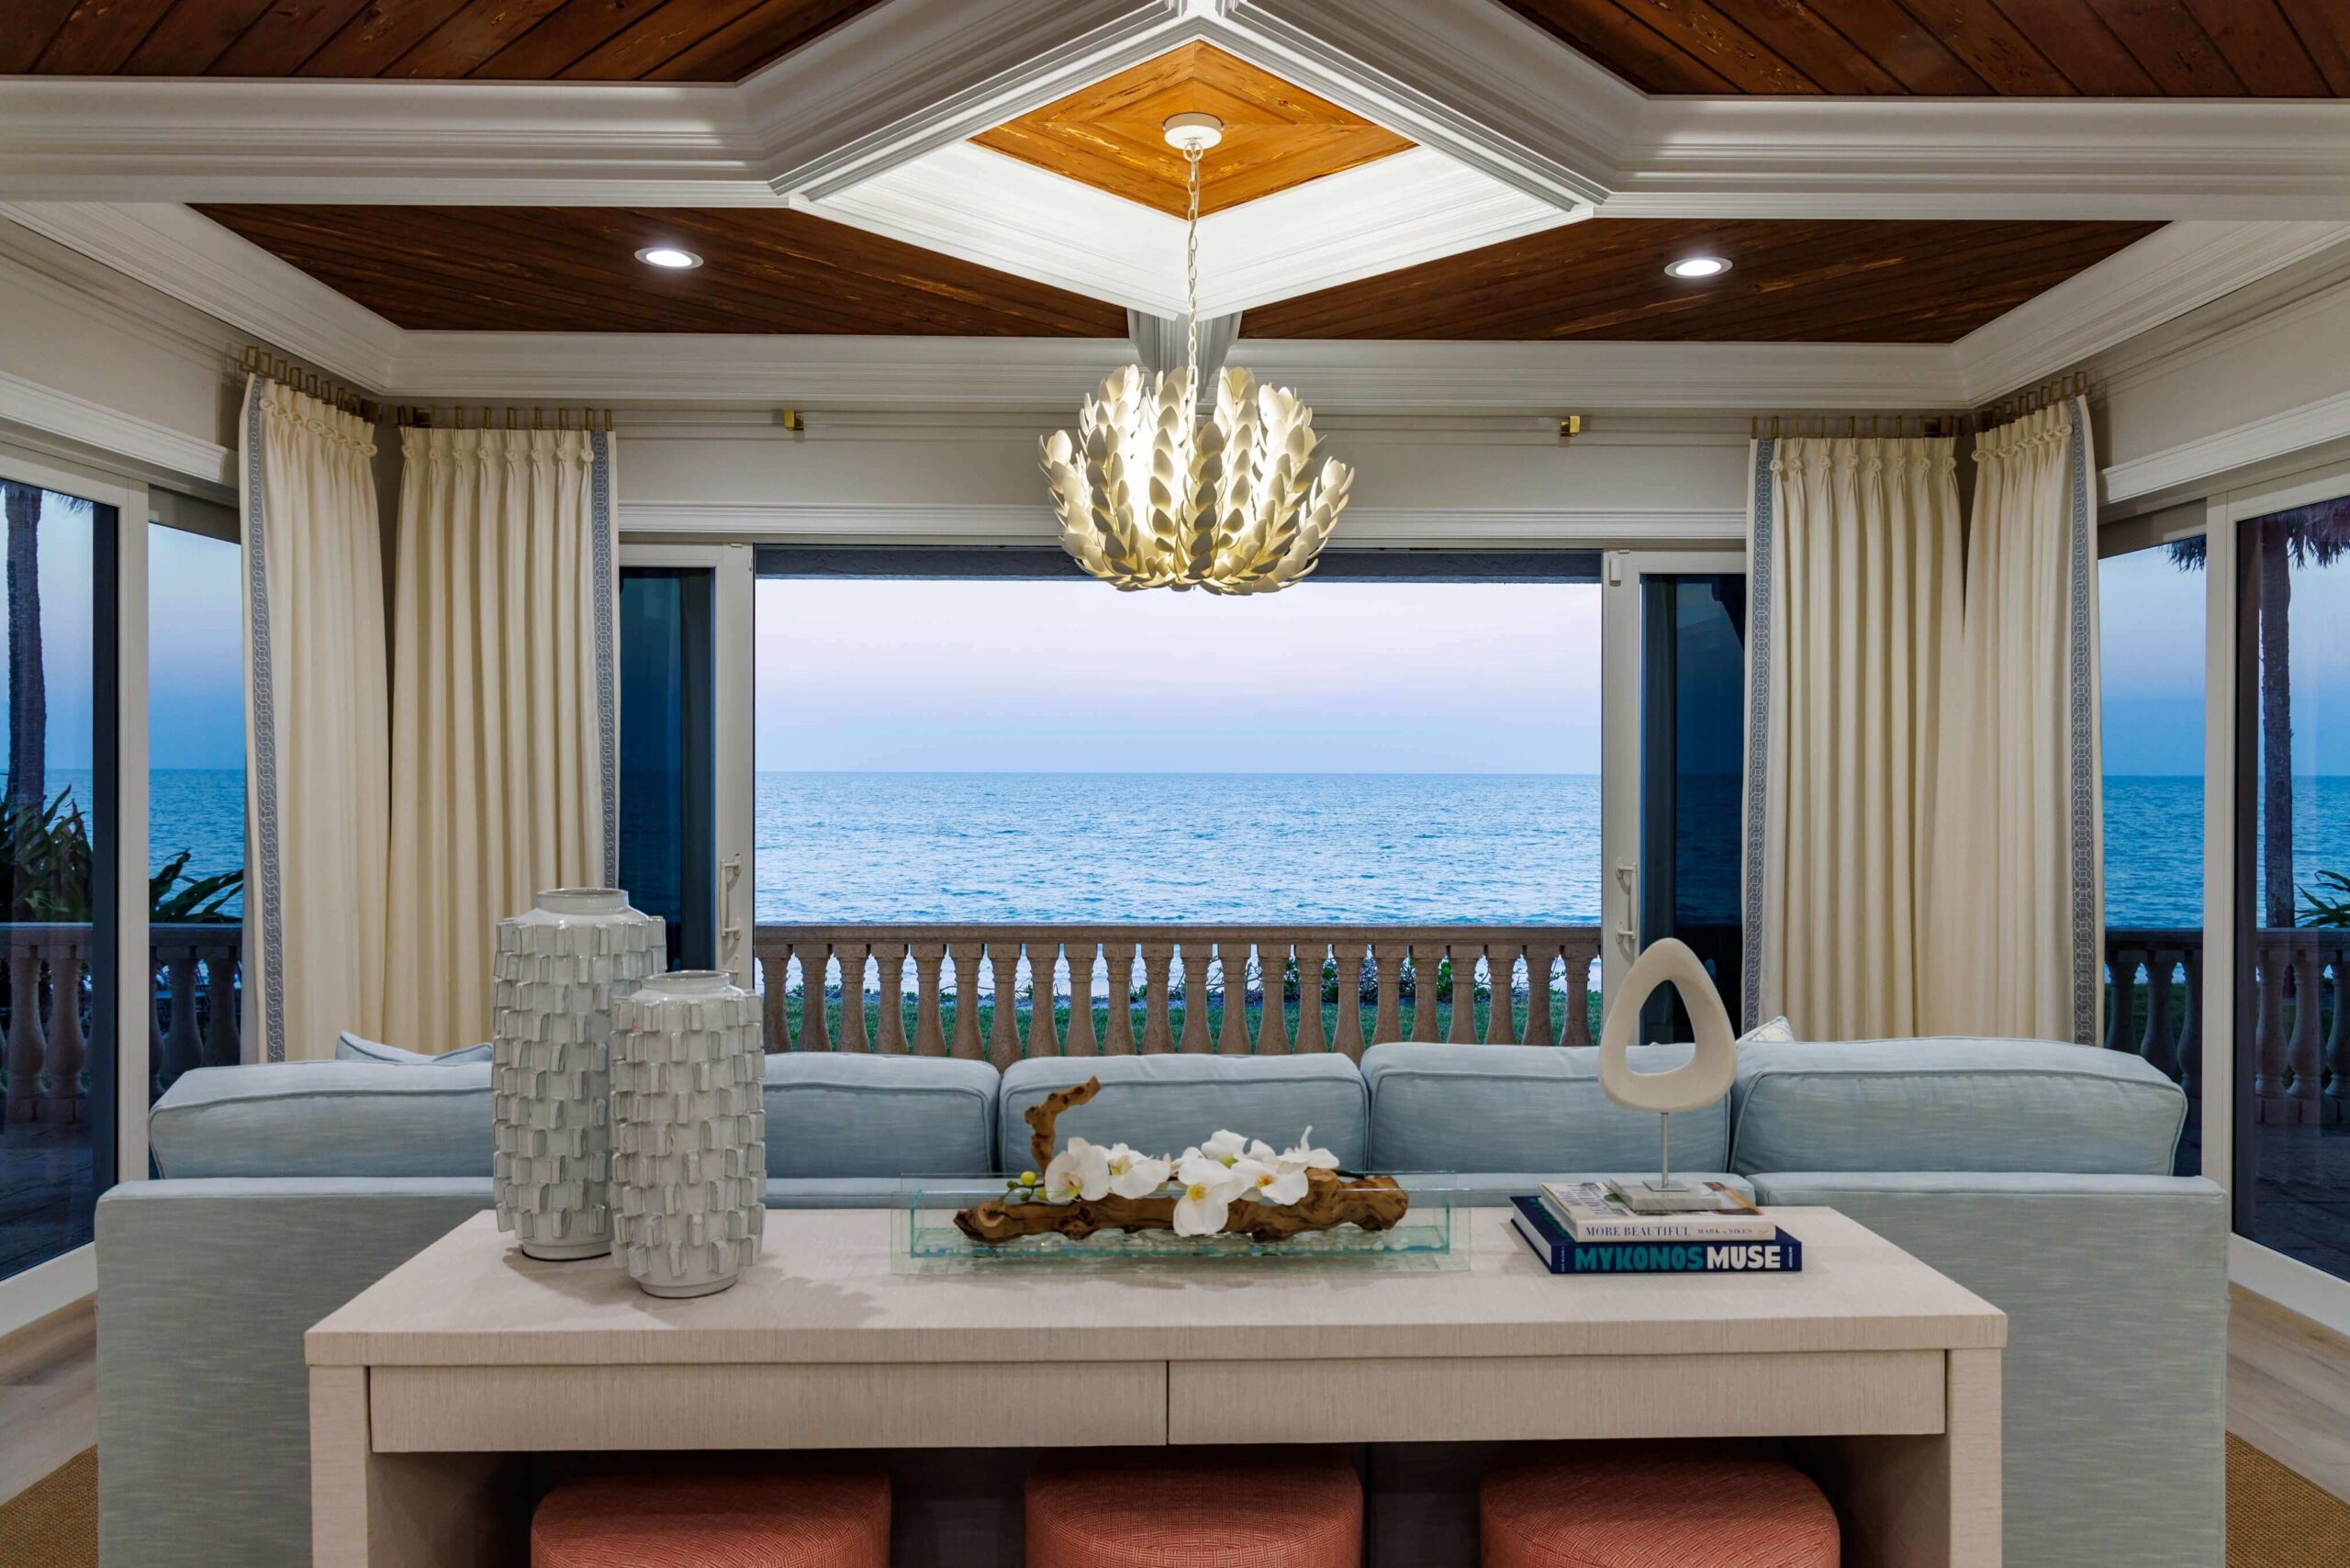 590 Reef Road Remodel - Living Room with Ocean View